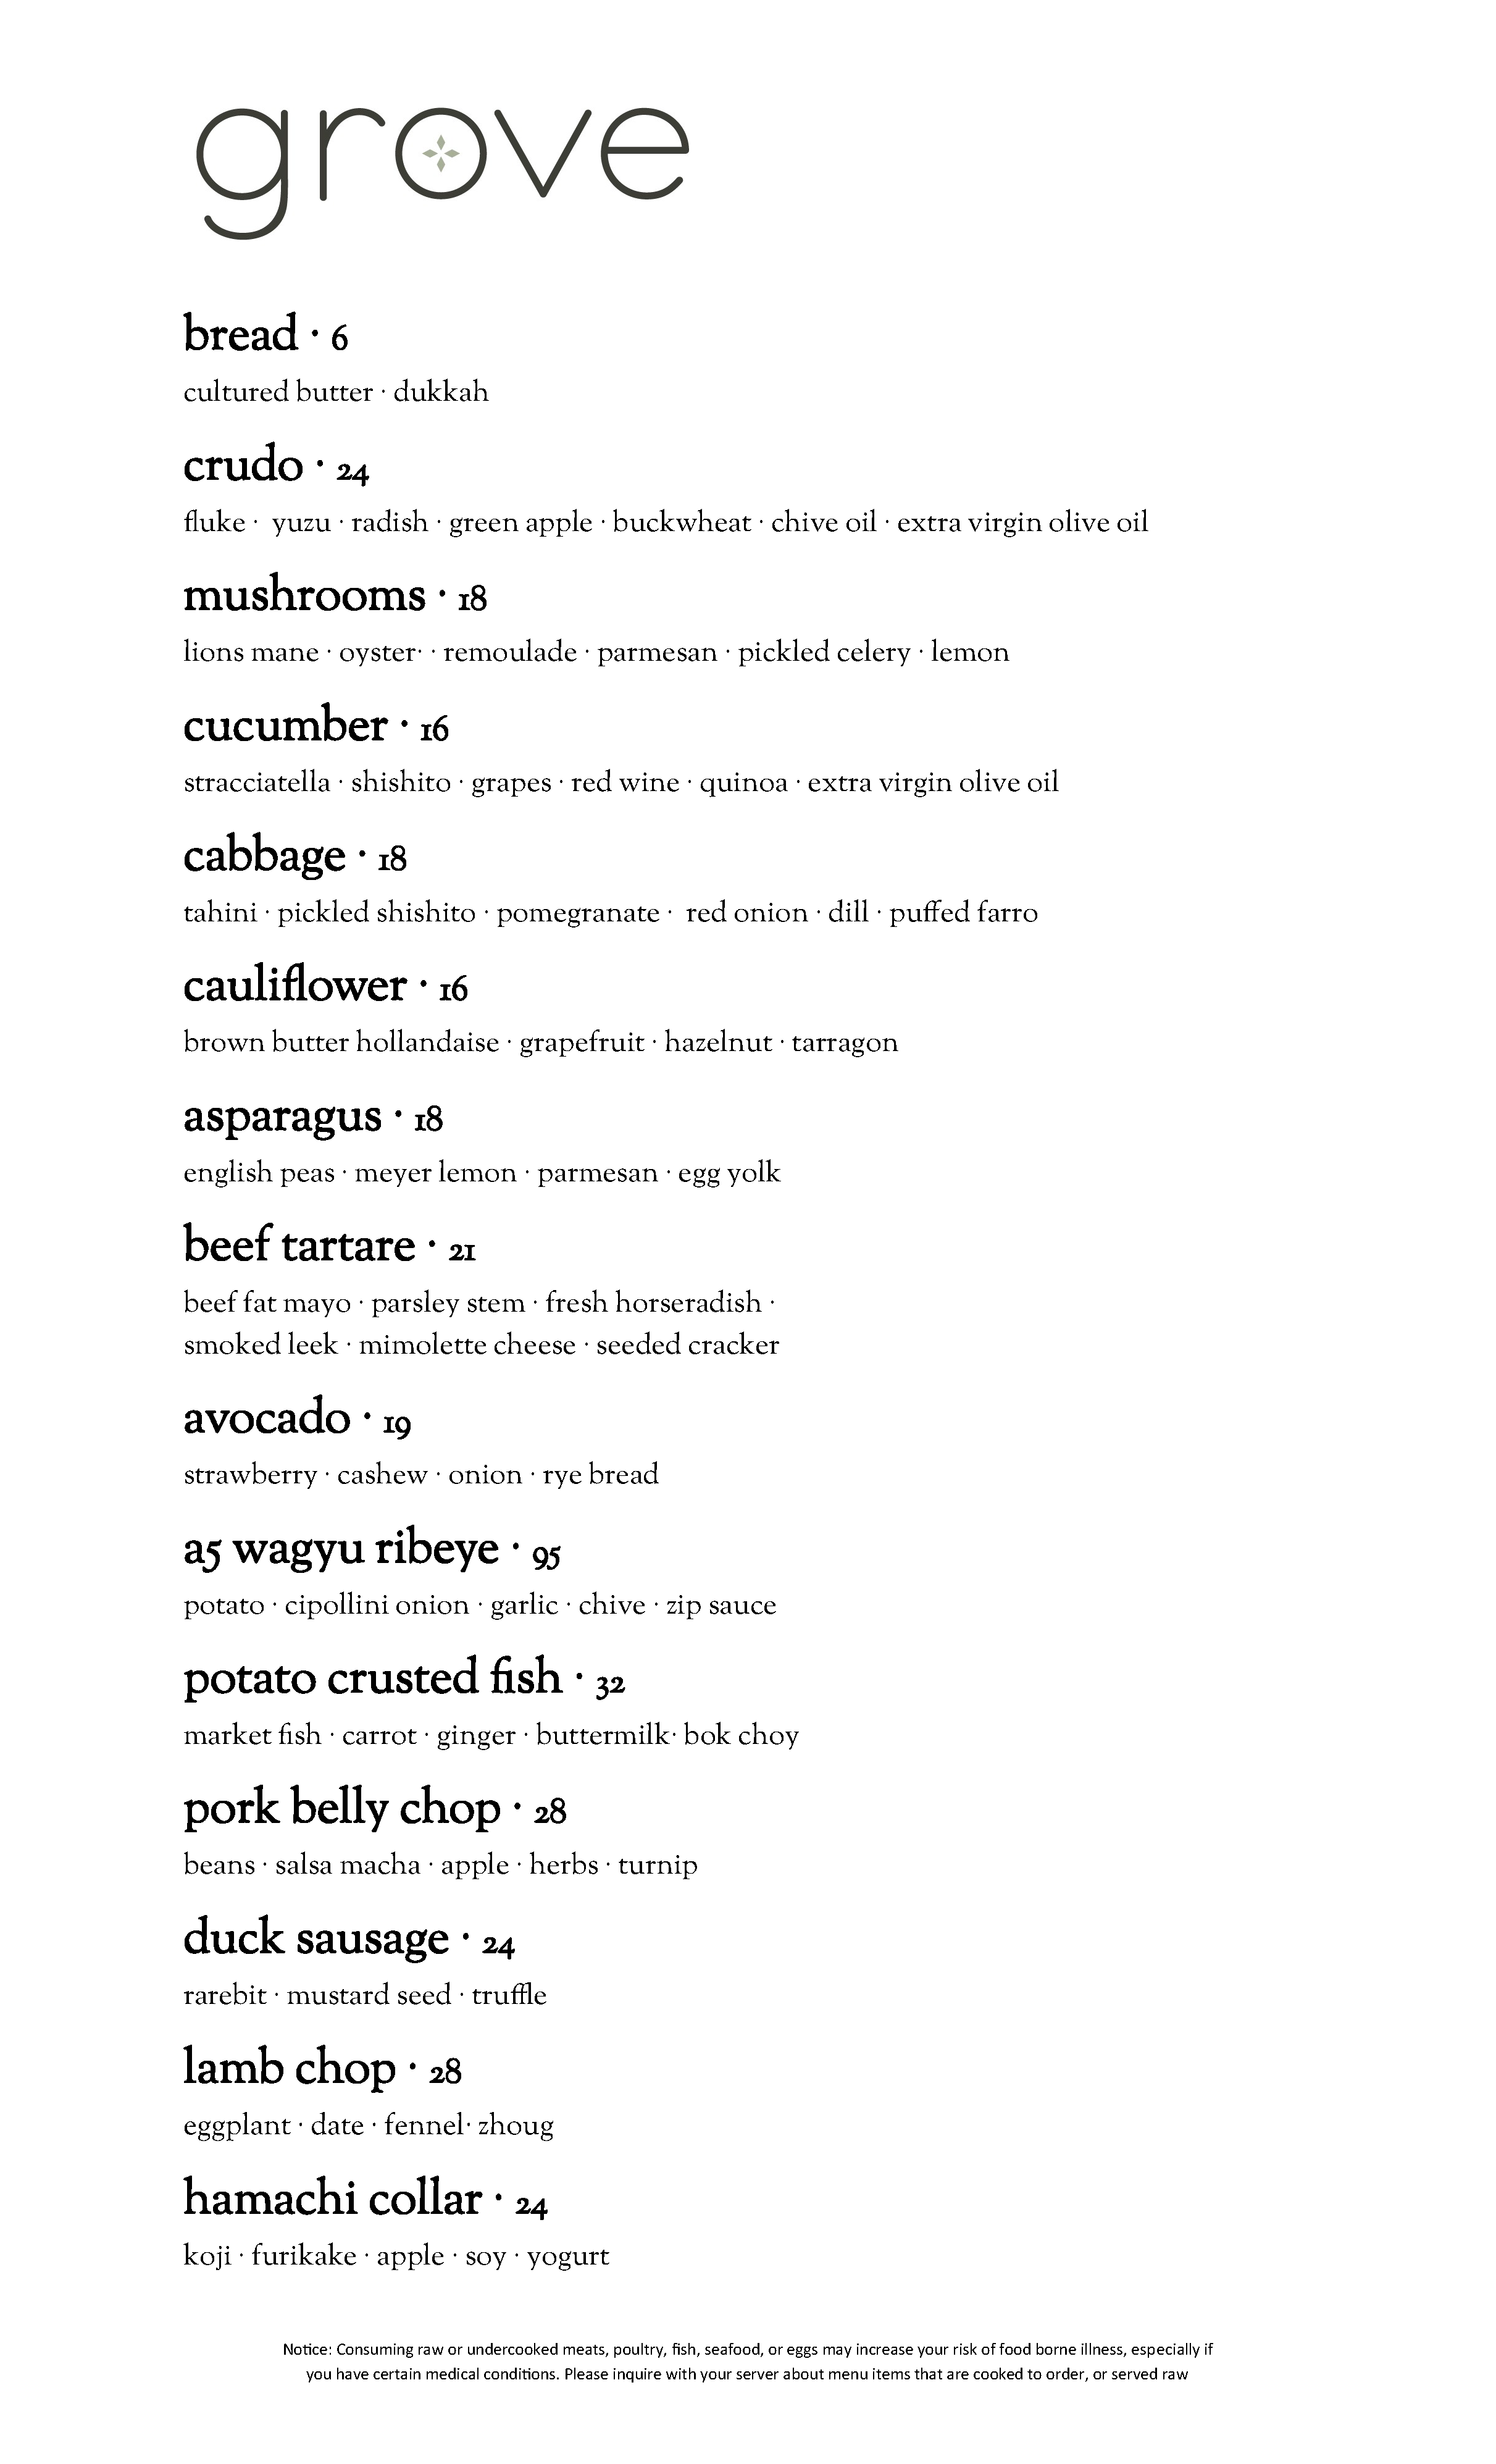 grove_restaurant_menu_4.28.22_grand_rapids_MI_Page_1